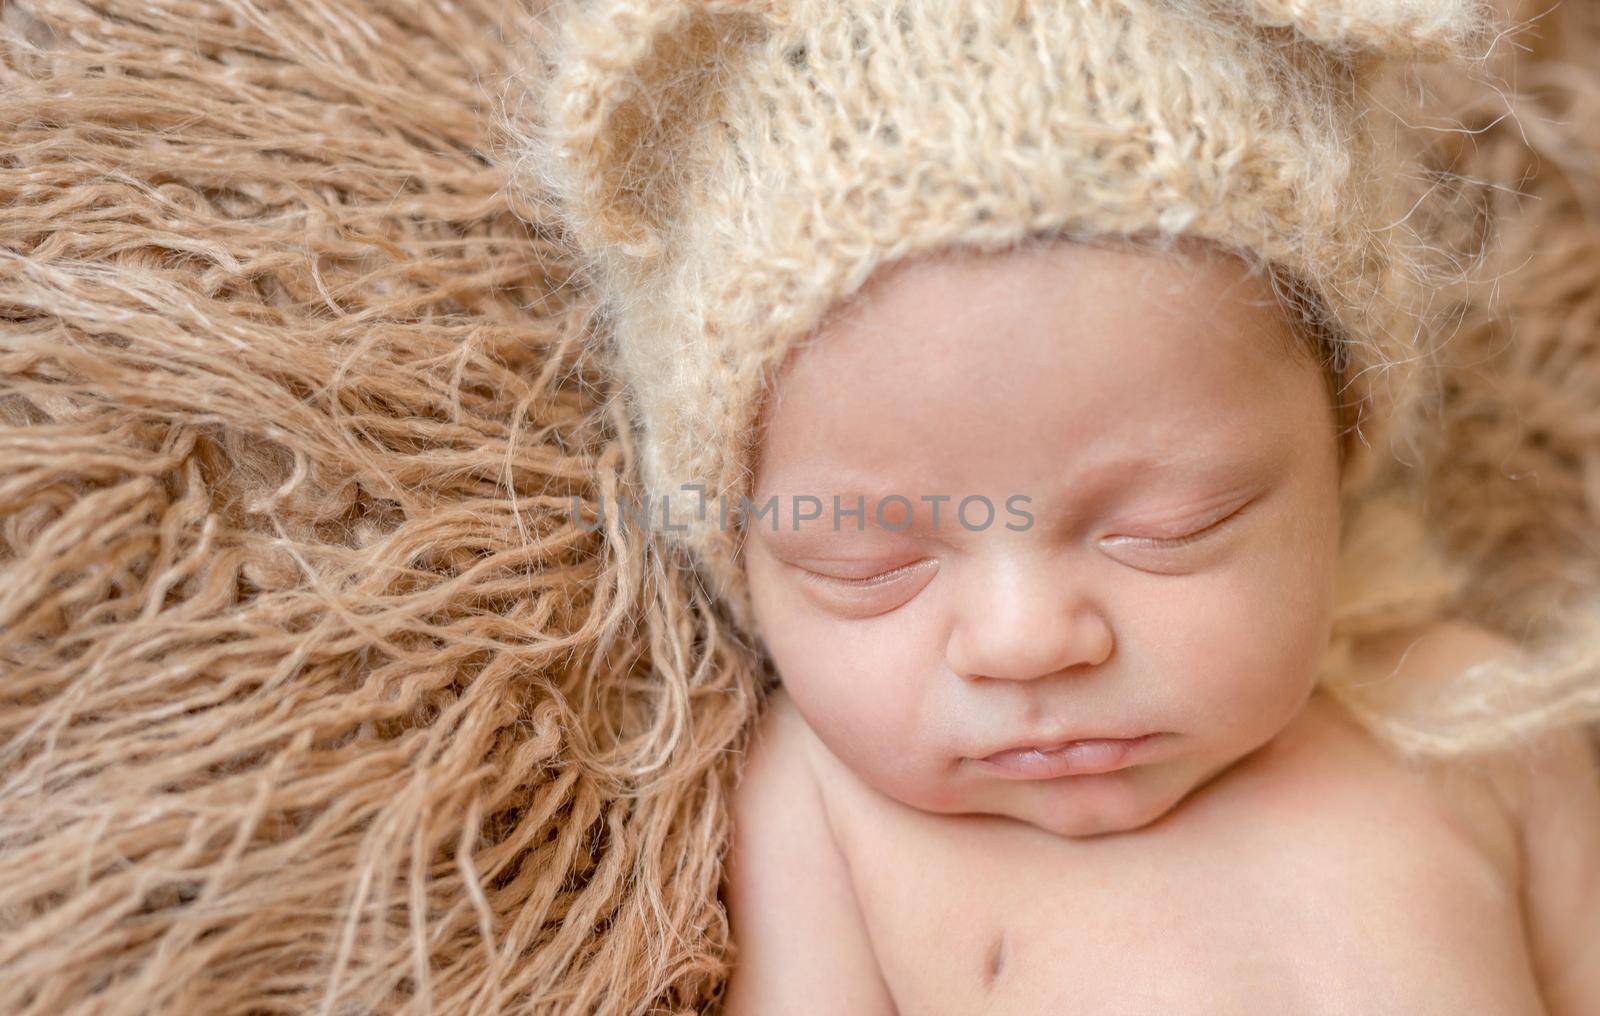 asleep smiling newborn baby in hat by tan4ikk1